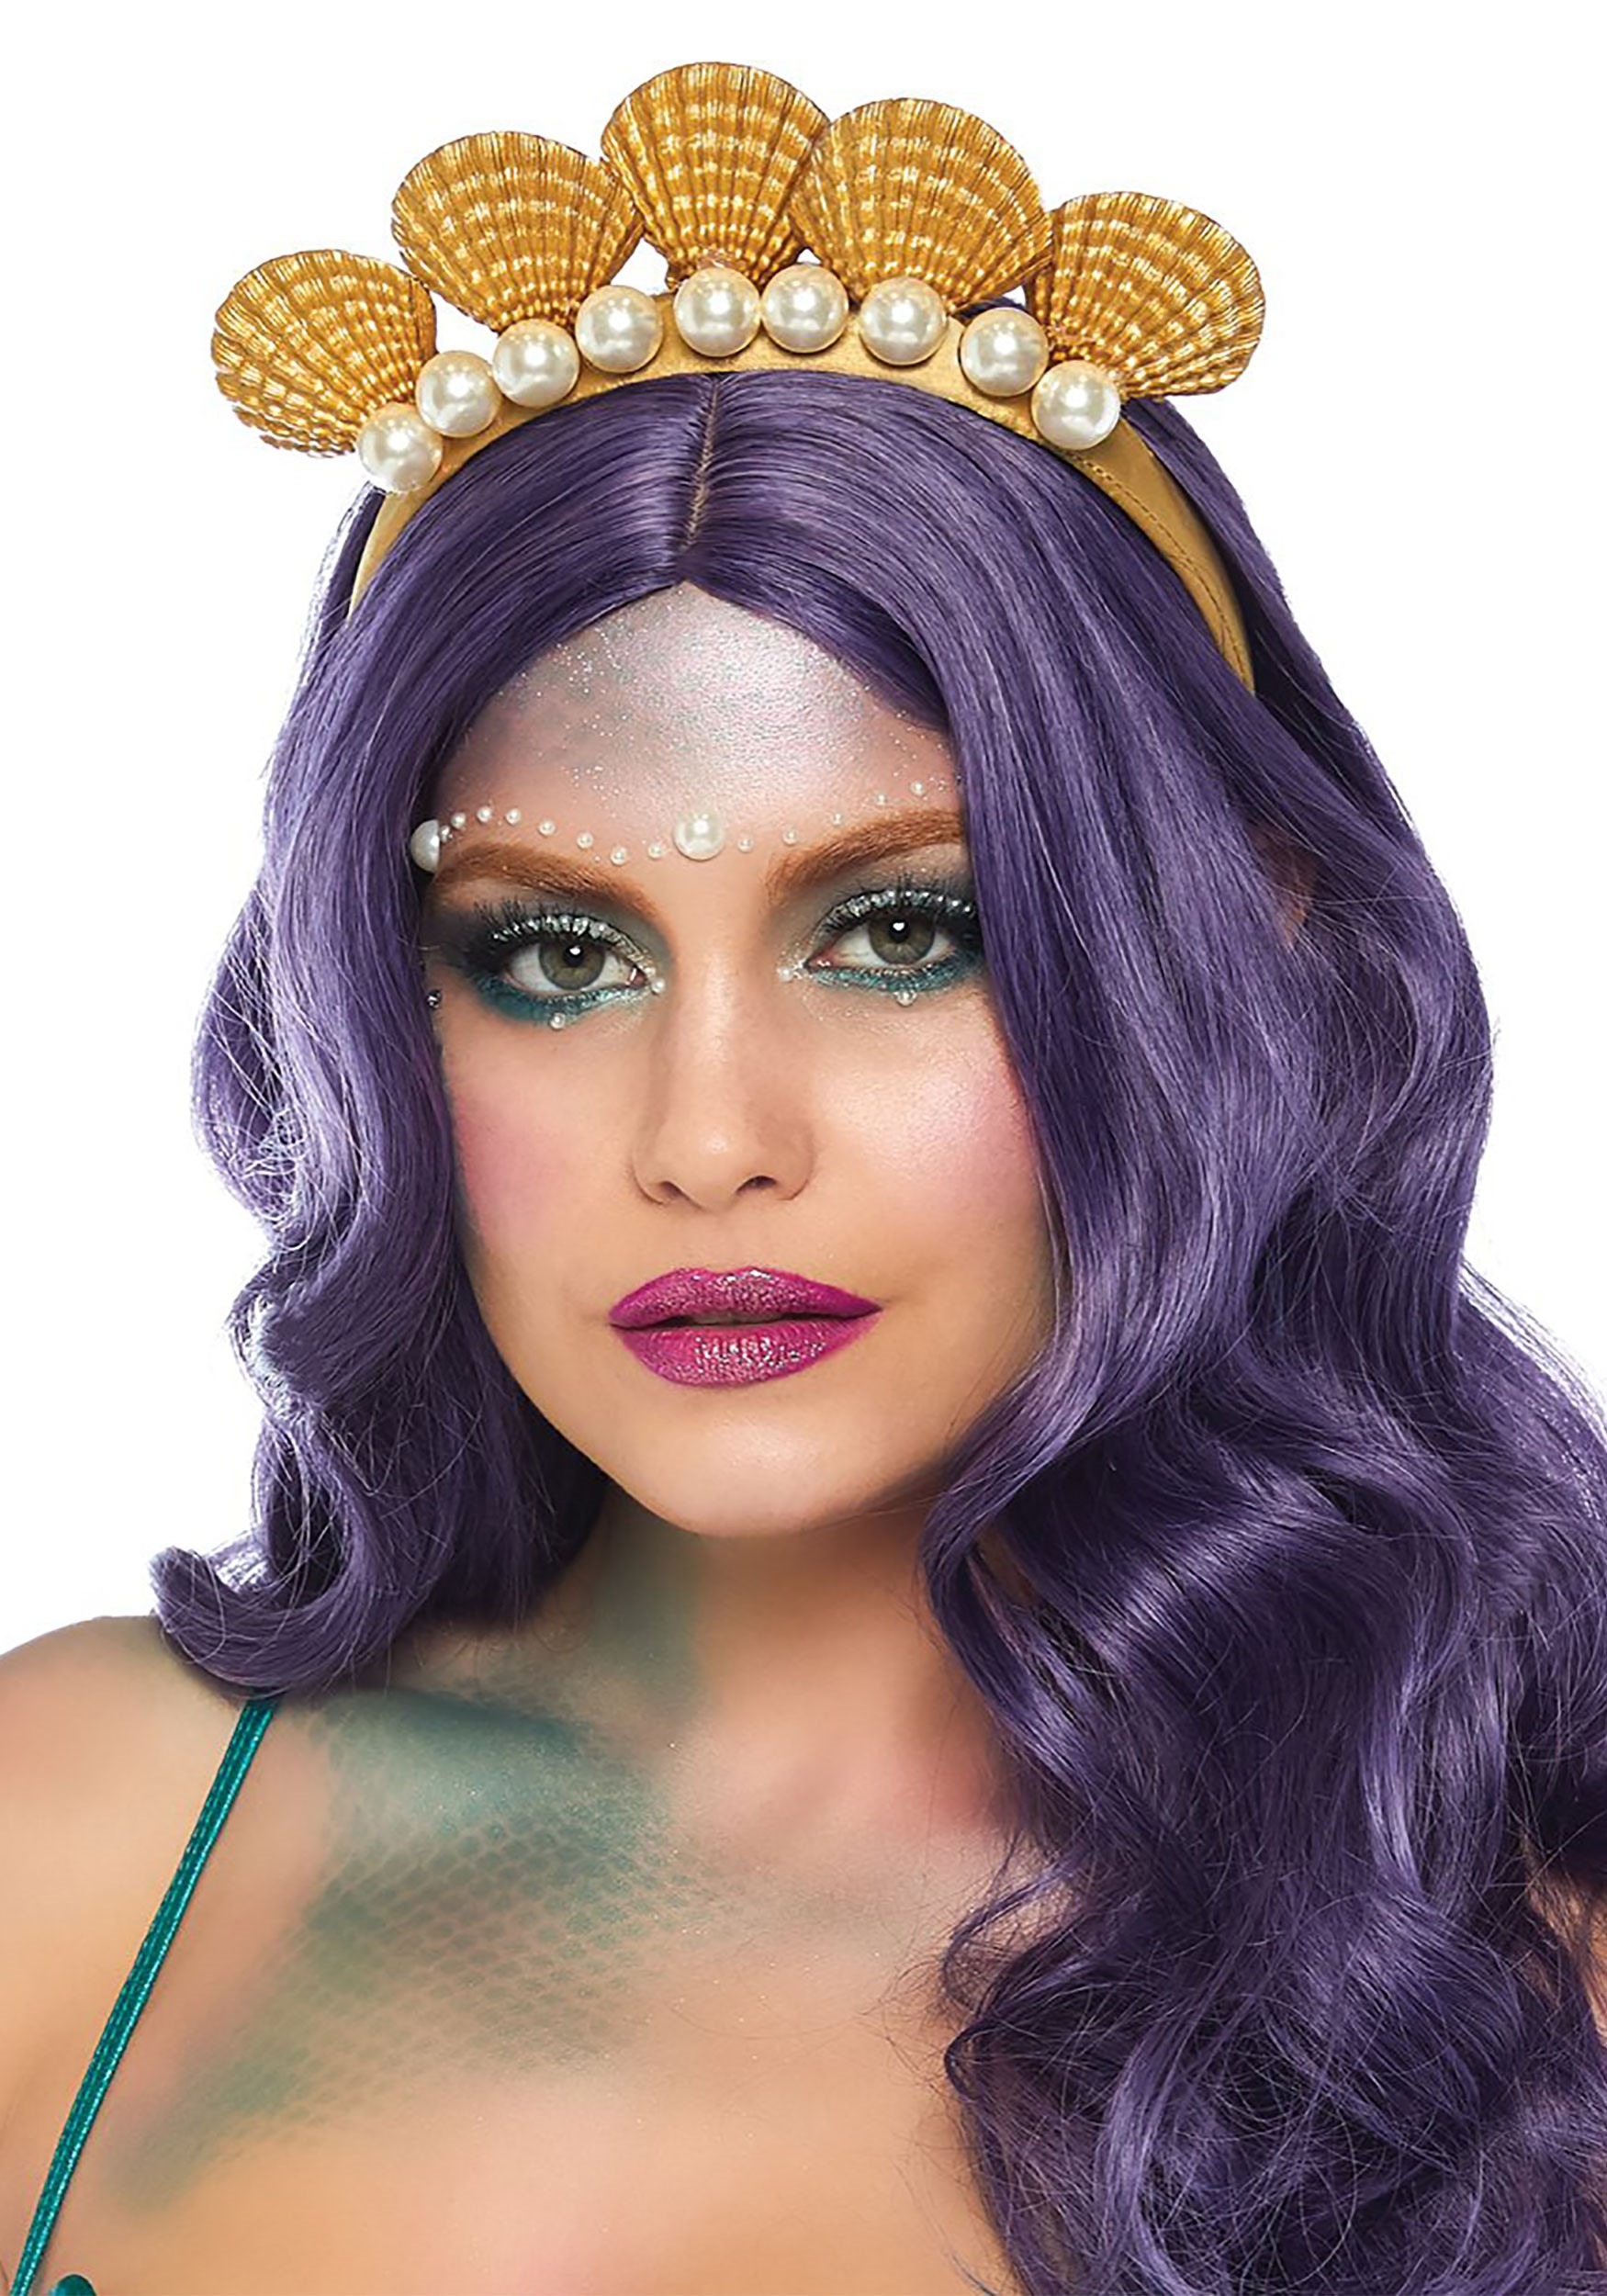 Mermaid Pearl Shell Headband Costume